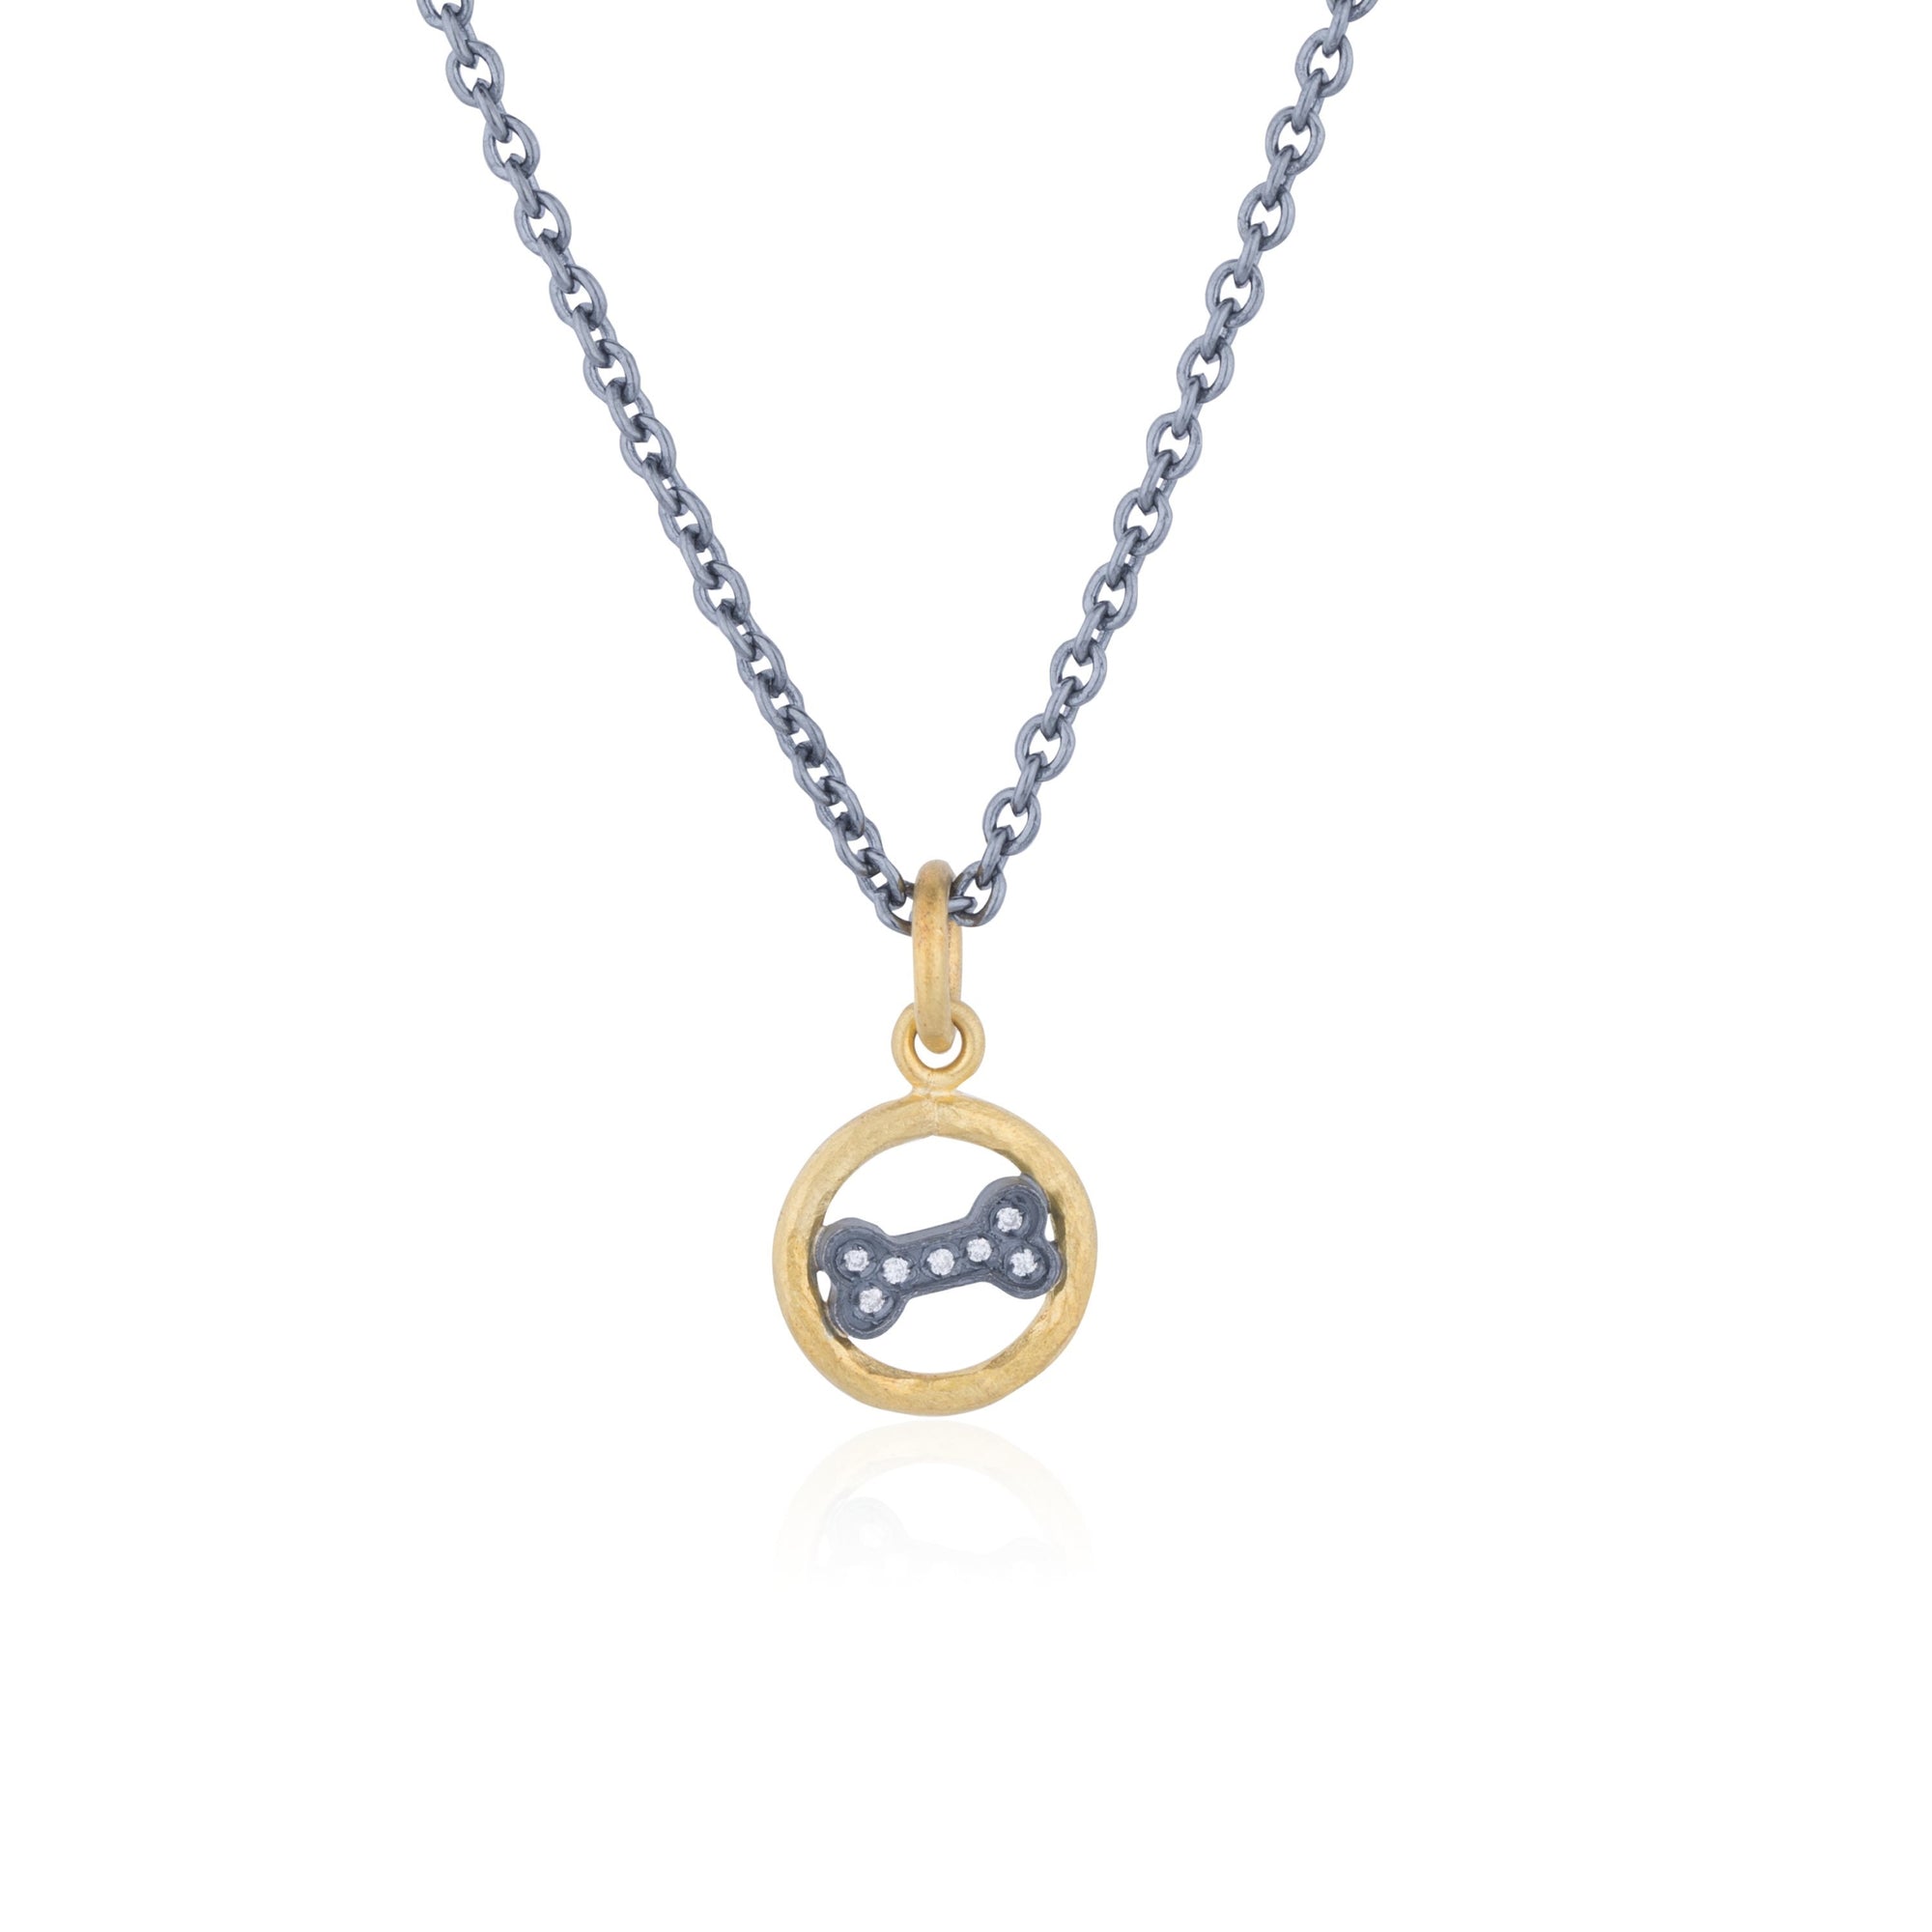 Lika Behar 24K Gold & Oxidized Silver Dog Bone Necklace with Diamond Accents